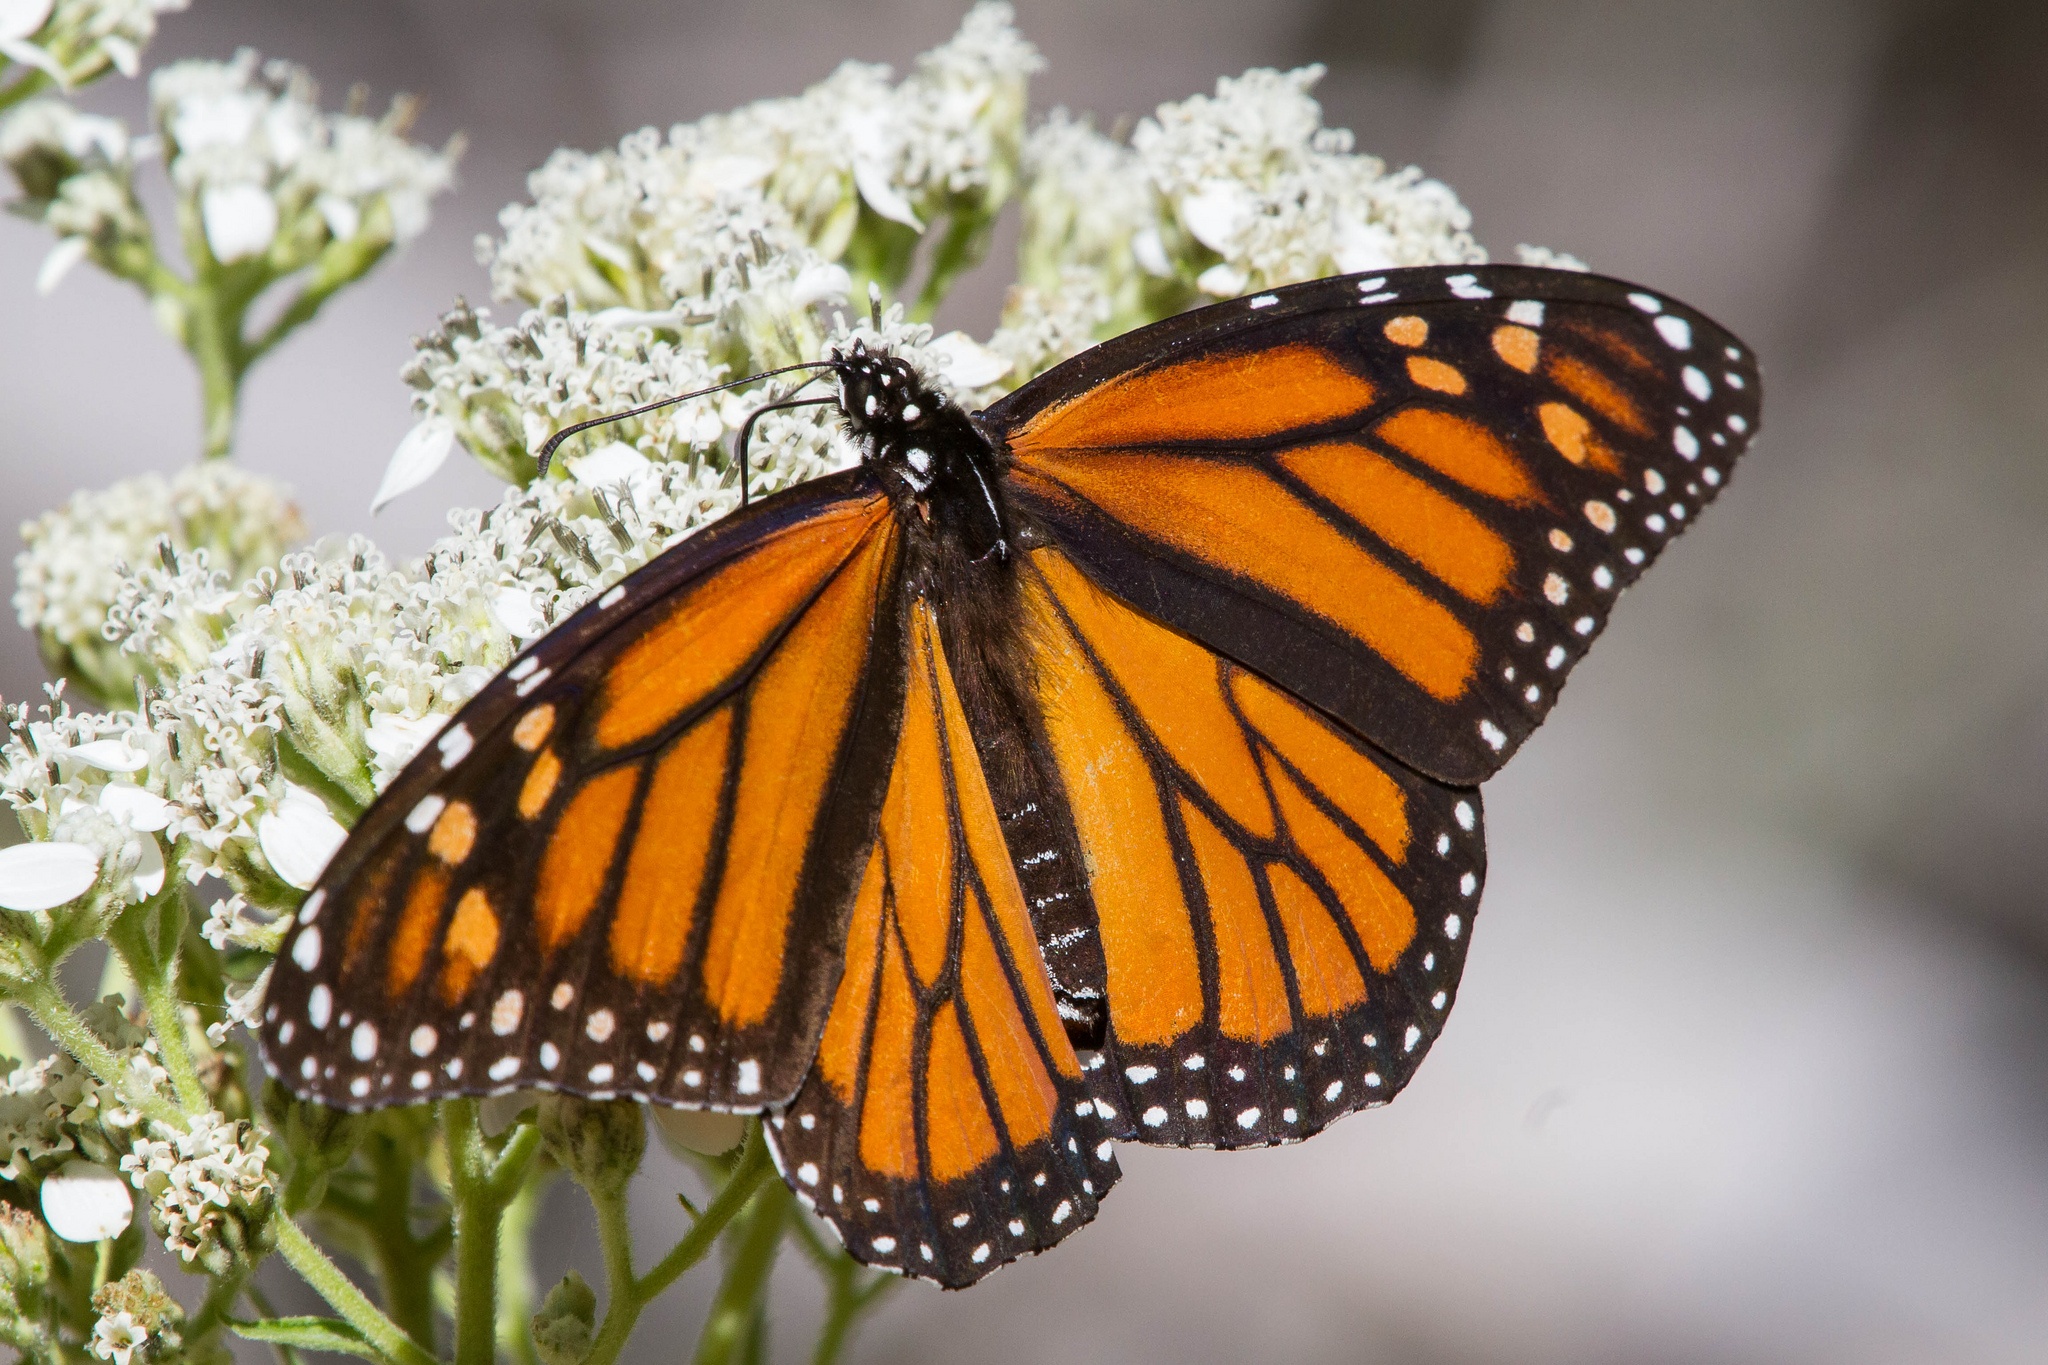 Austin, Texas Creates Habitat for the Declining Monarch